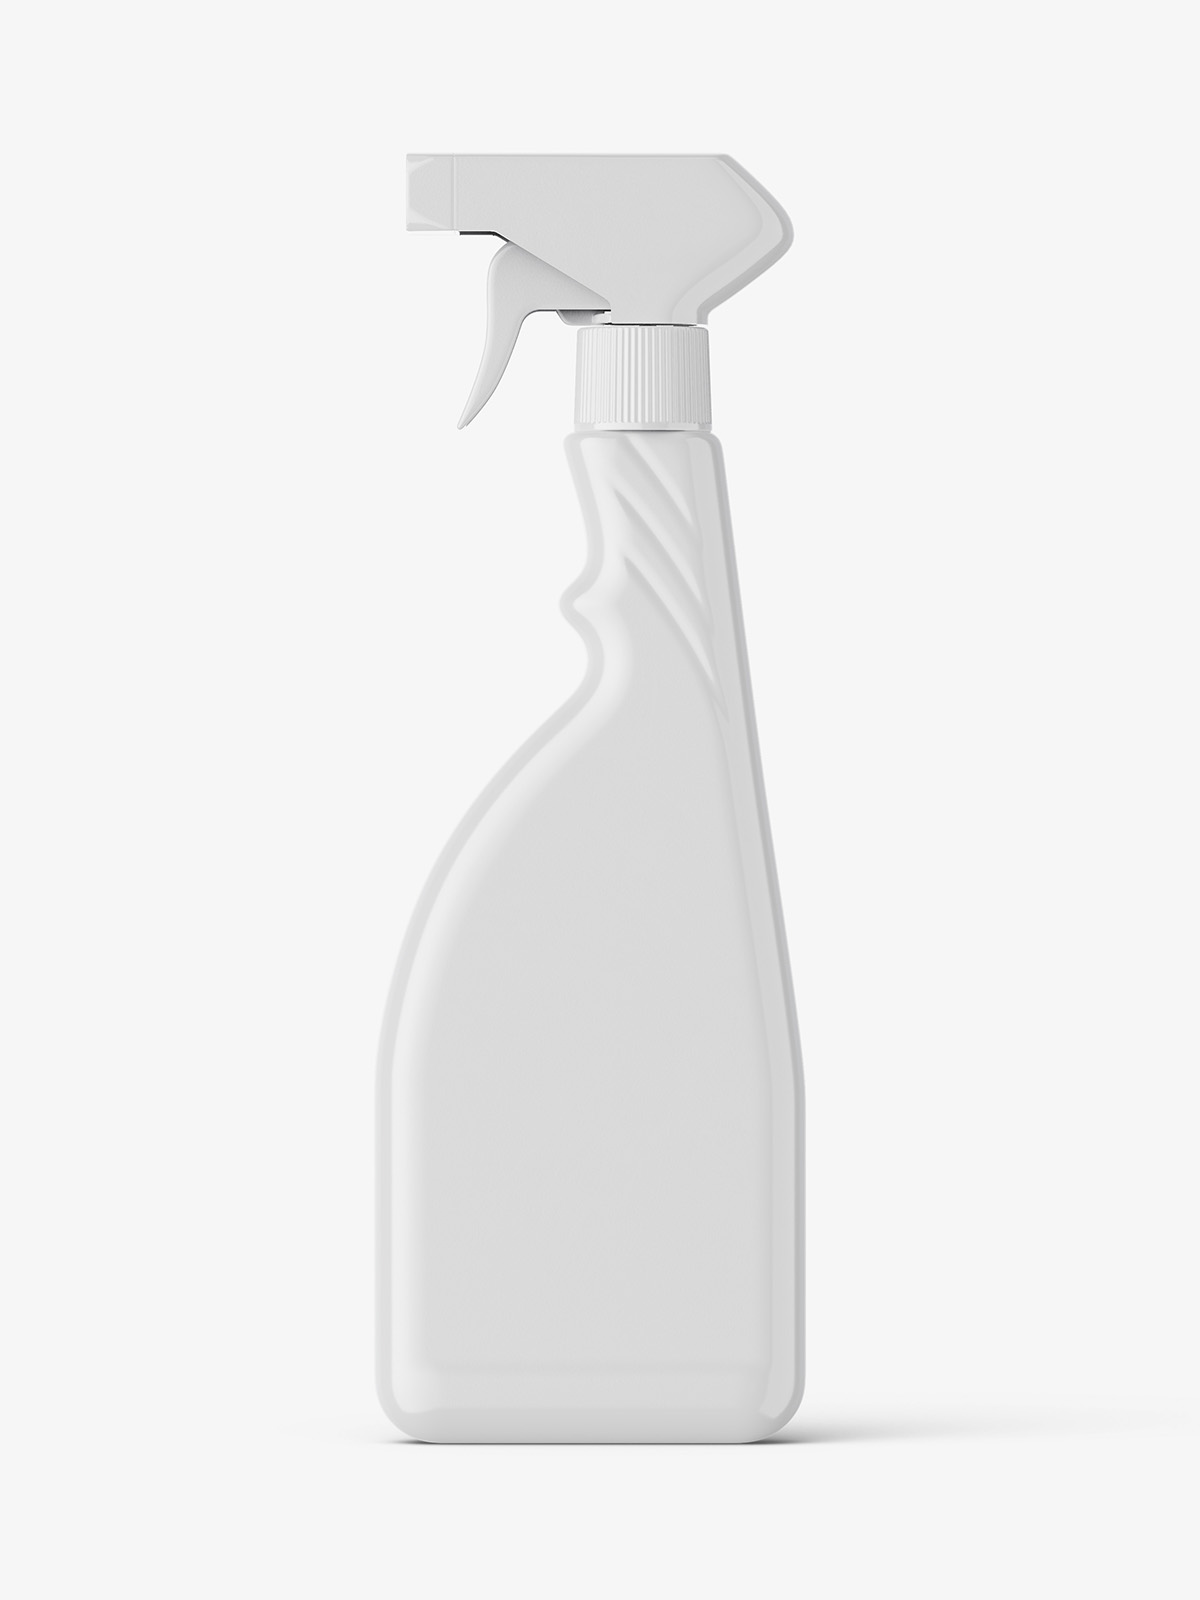 Download Bottle With Trigger Spray Mockup Smarty Mockups PSD Mockup Templates